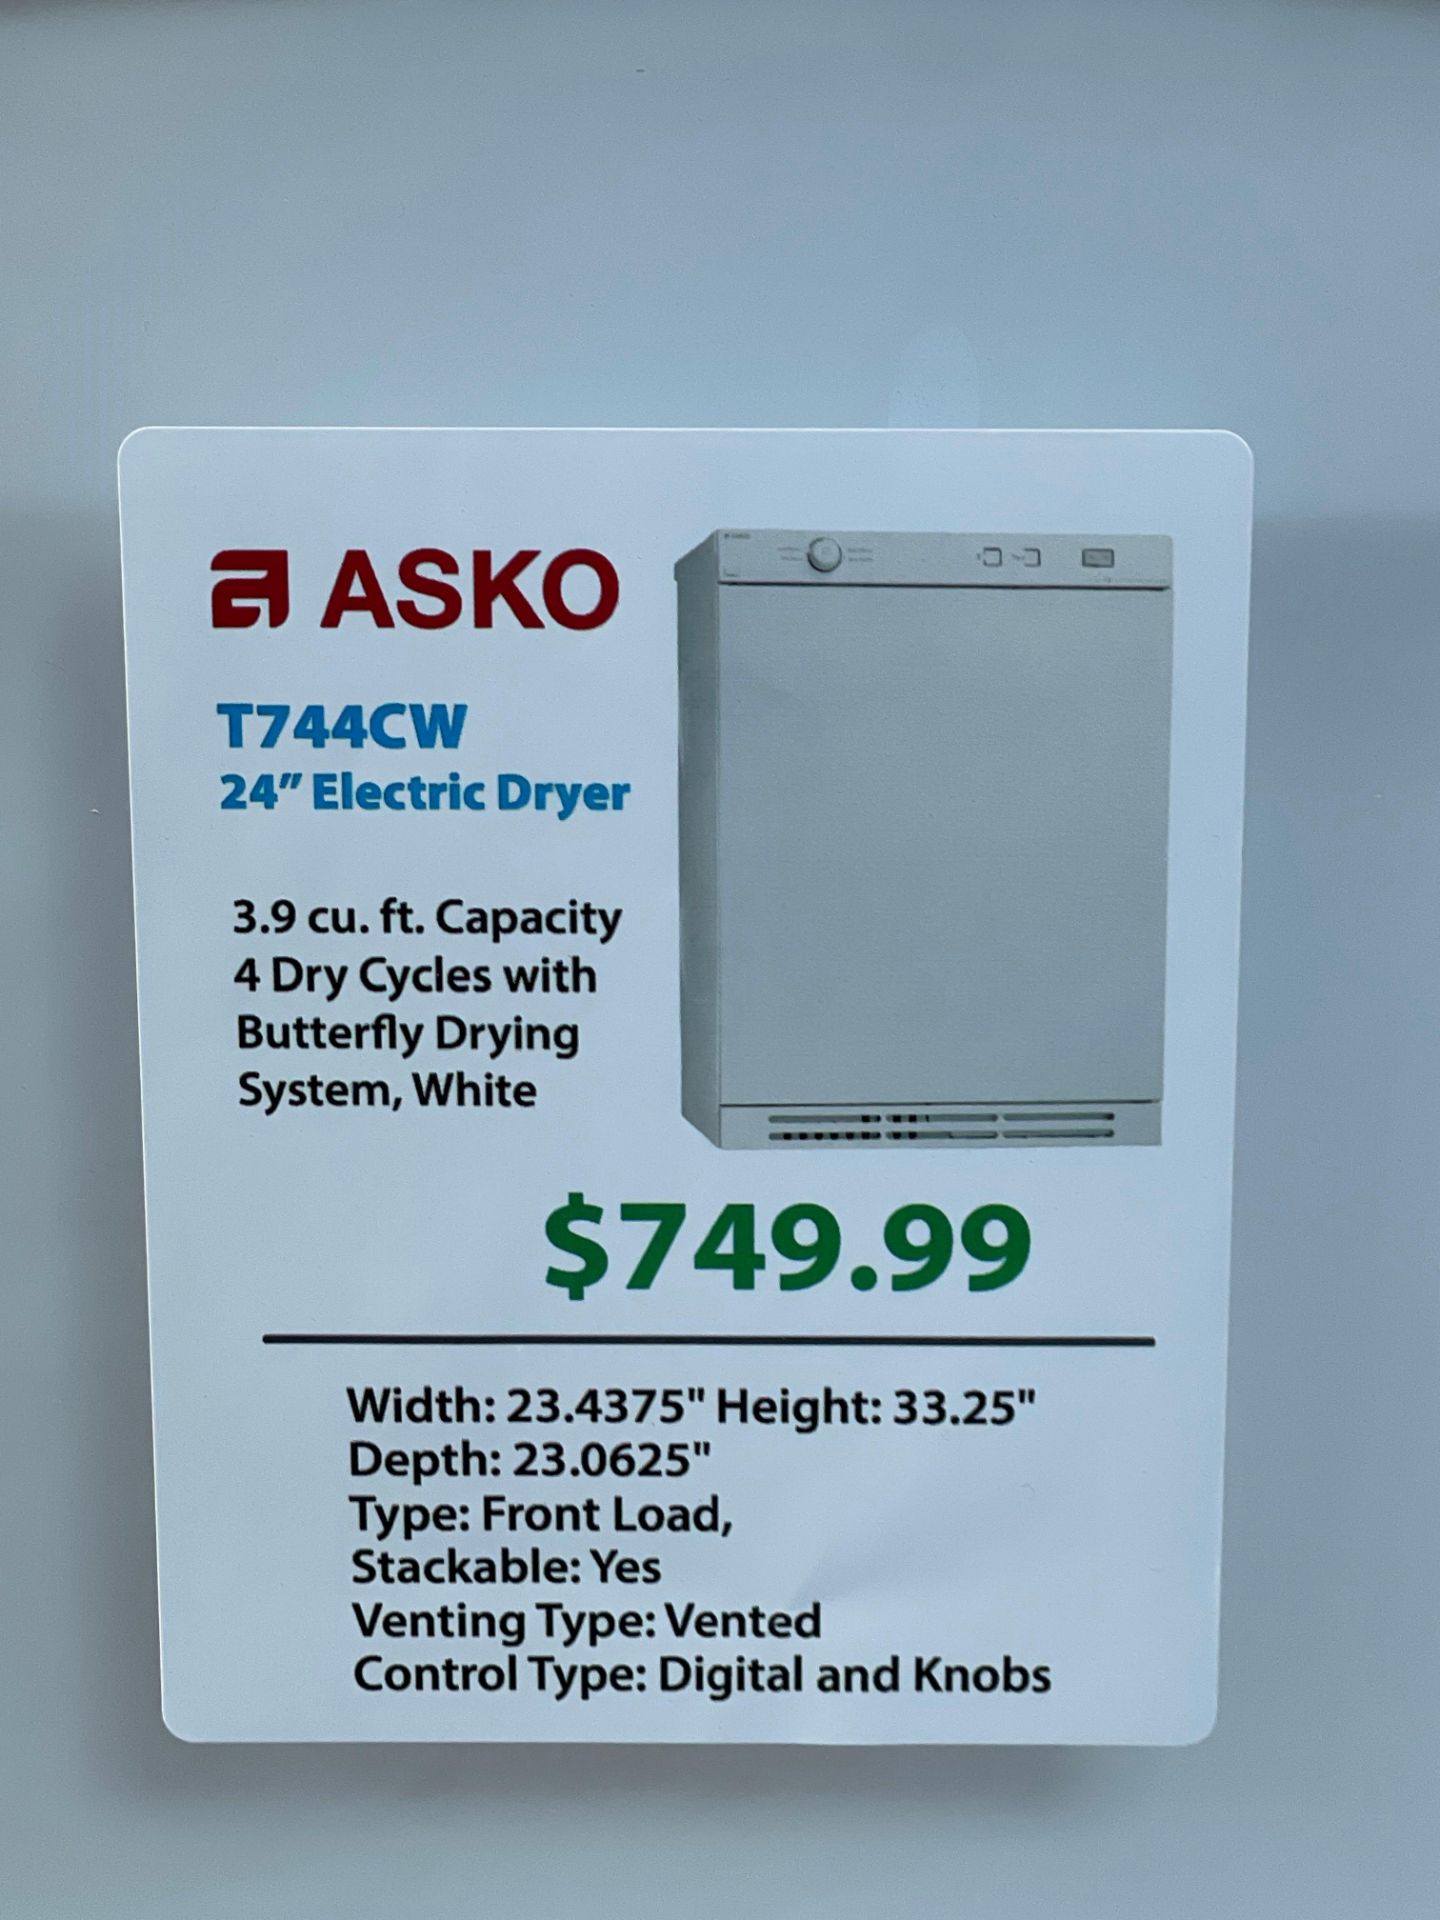 Pallet- Asko T744CW 24" Electric Dryer